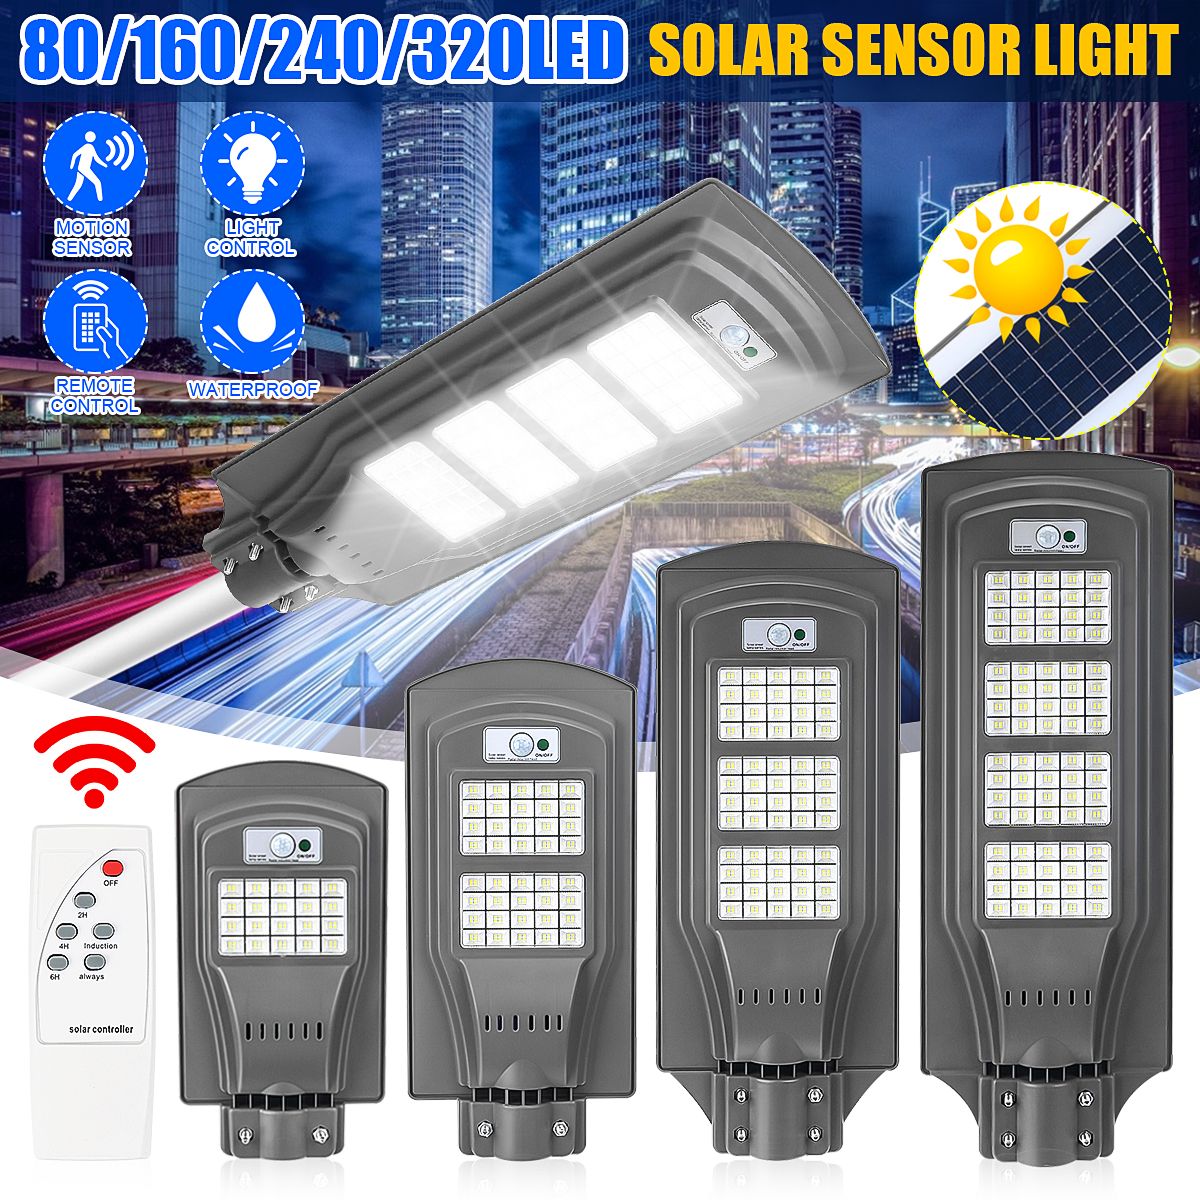 80160240320LED-Solar-Street-Light-PIR-Motion-Sensor-Wall-Lamp-WRemote-Waterproof-1719774